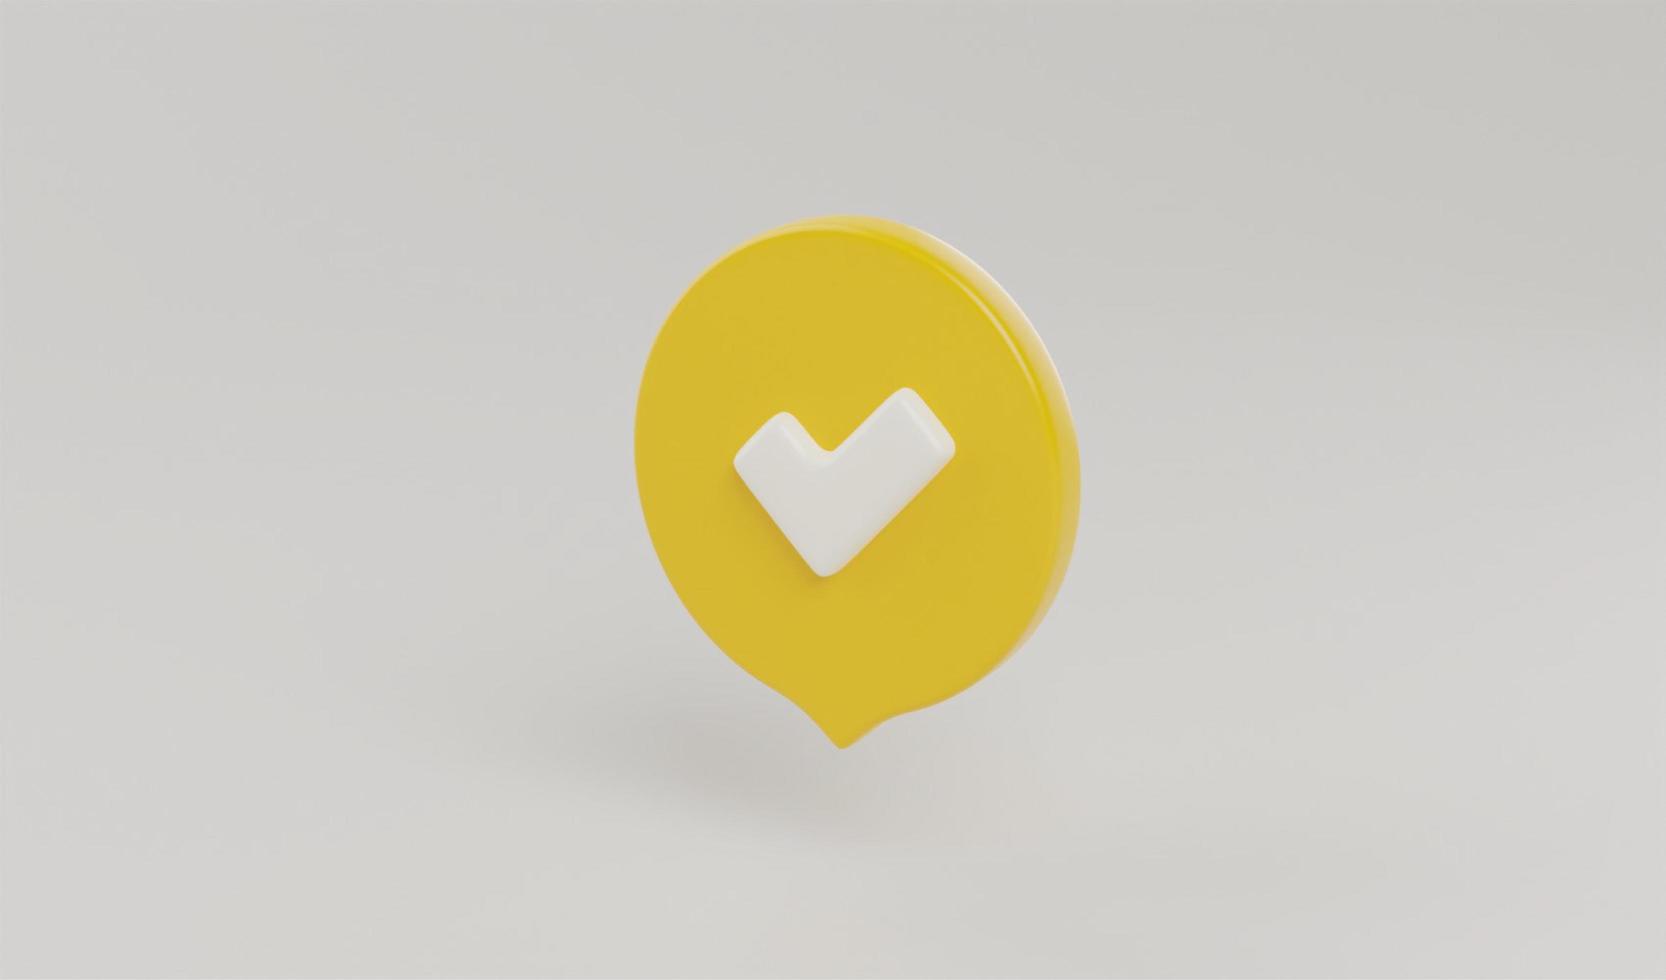 3d render check mark icon, Tick symbol for Like, correct, success, approve, Accept button concept illustration photo